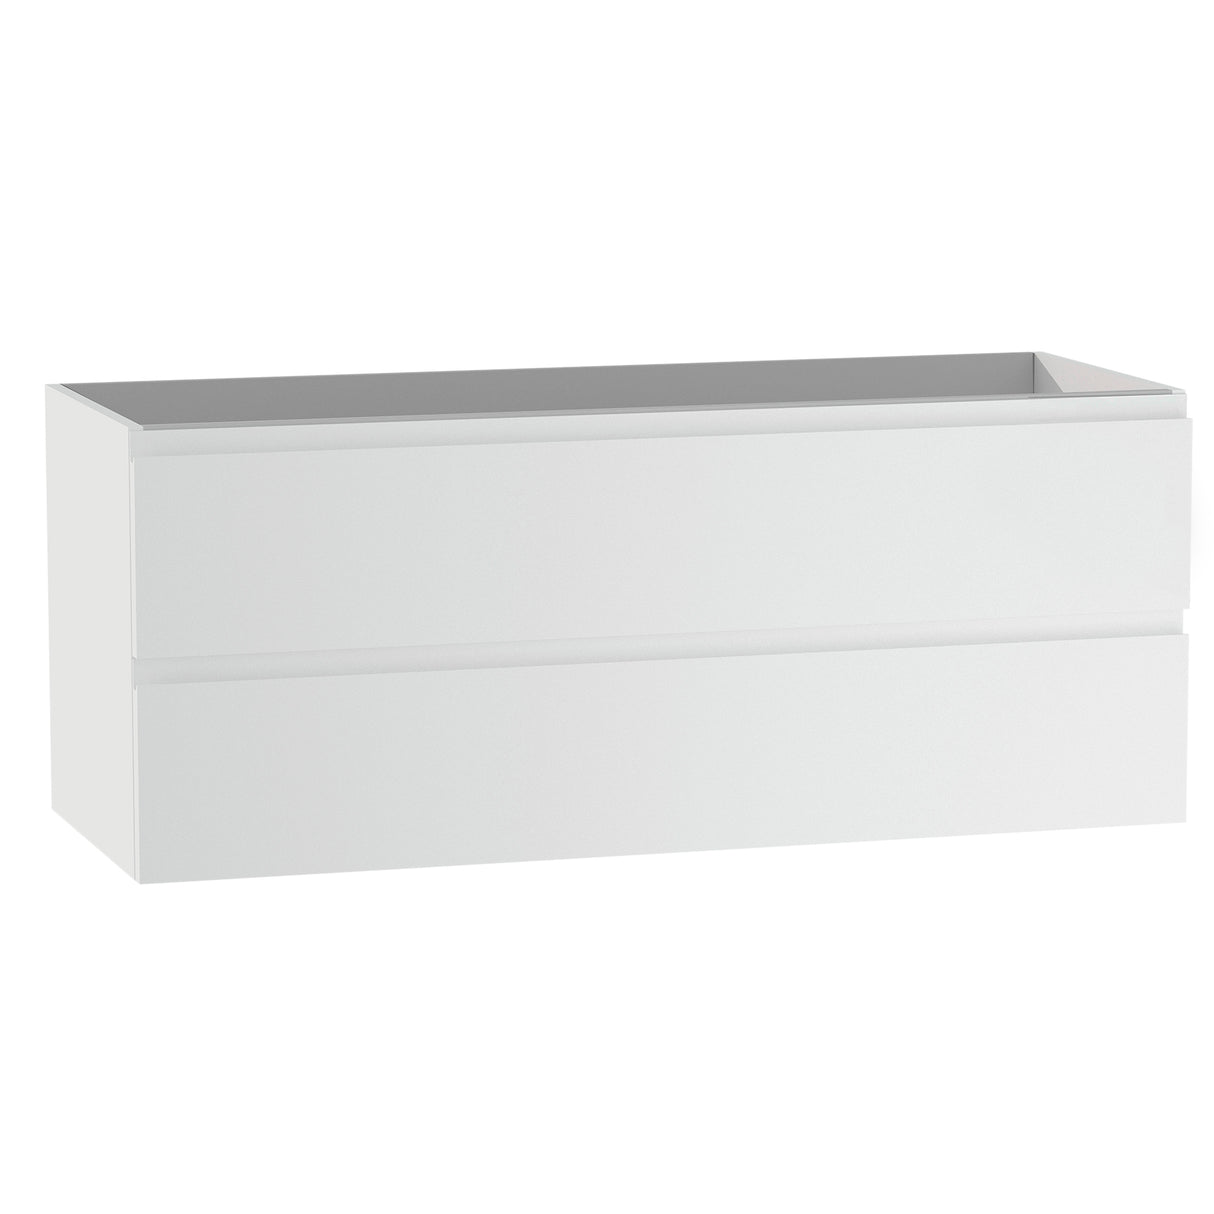 DAX Pasadena Single Vanity Cabinet with Onix Basin, 48", Matte White DAX-PAS014827-ONX